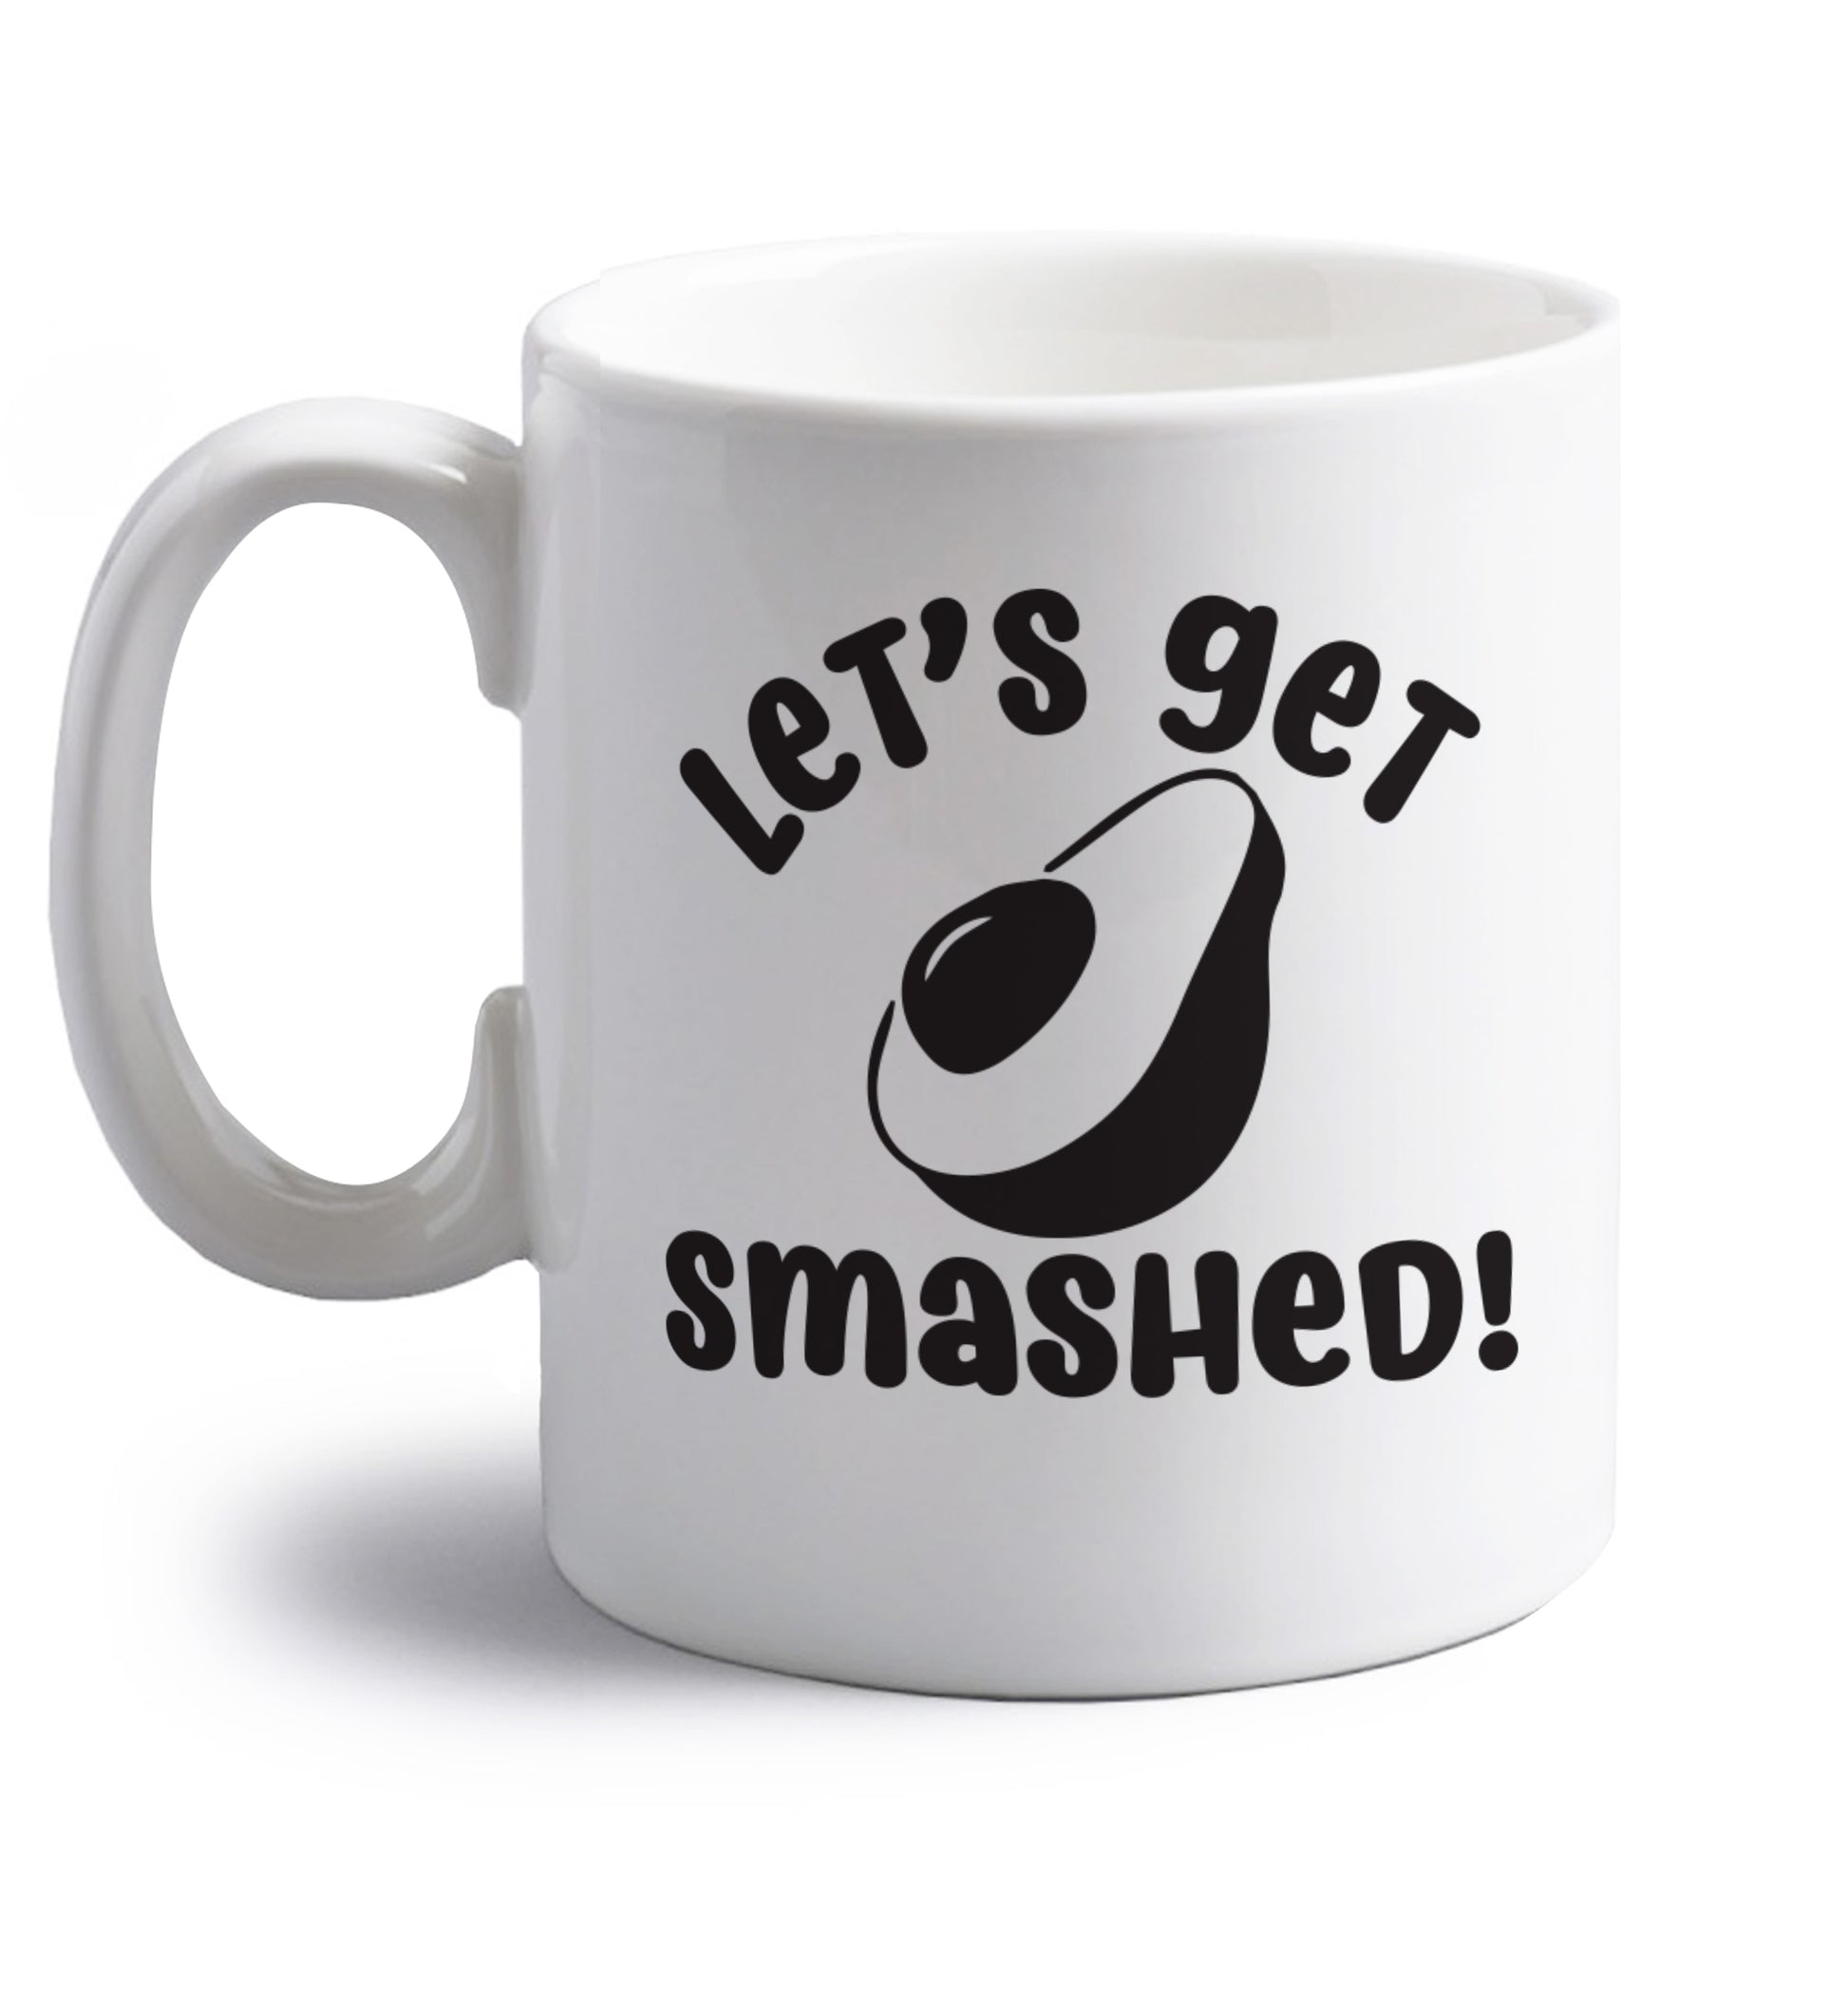 Let's get smashed right handed white ceramic mug 